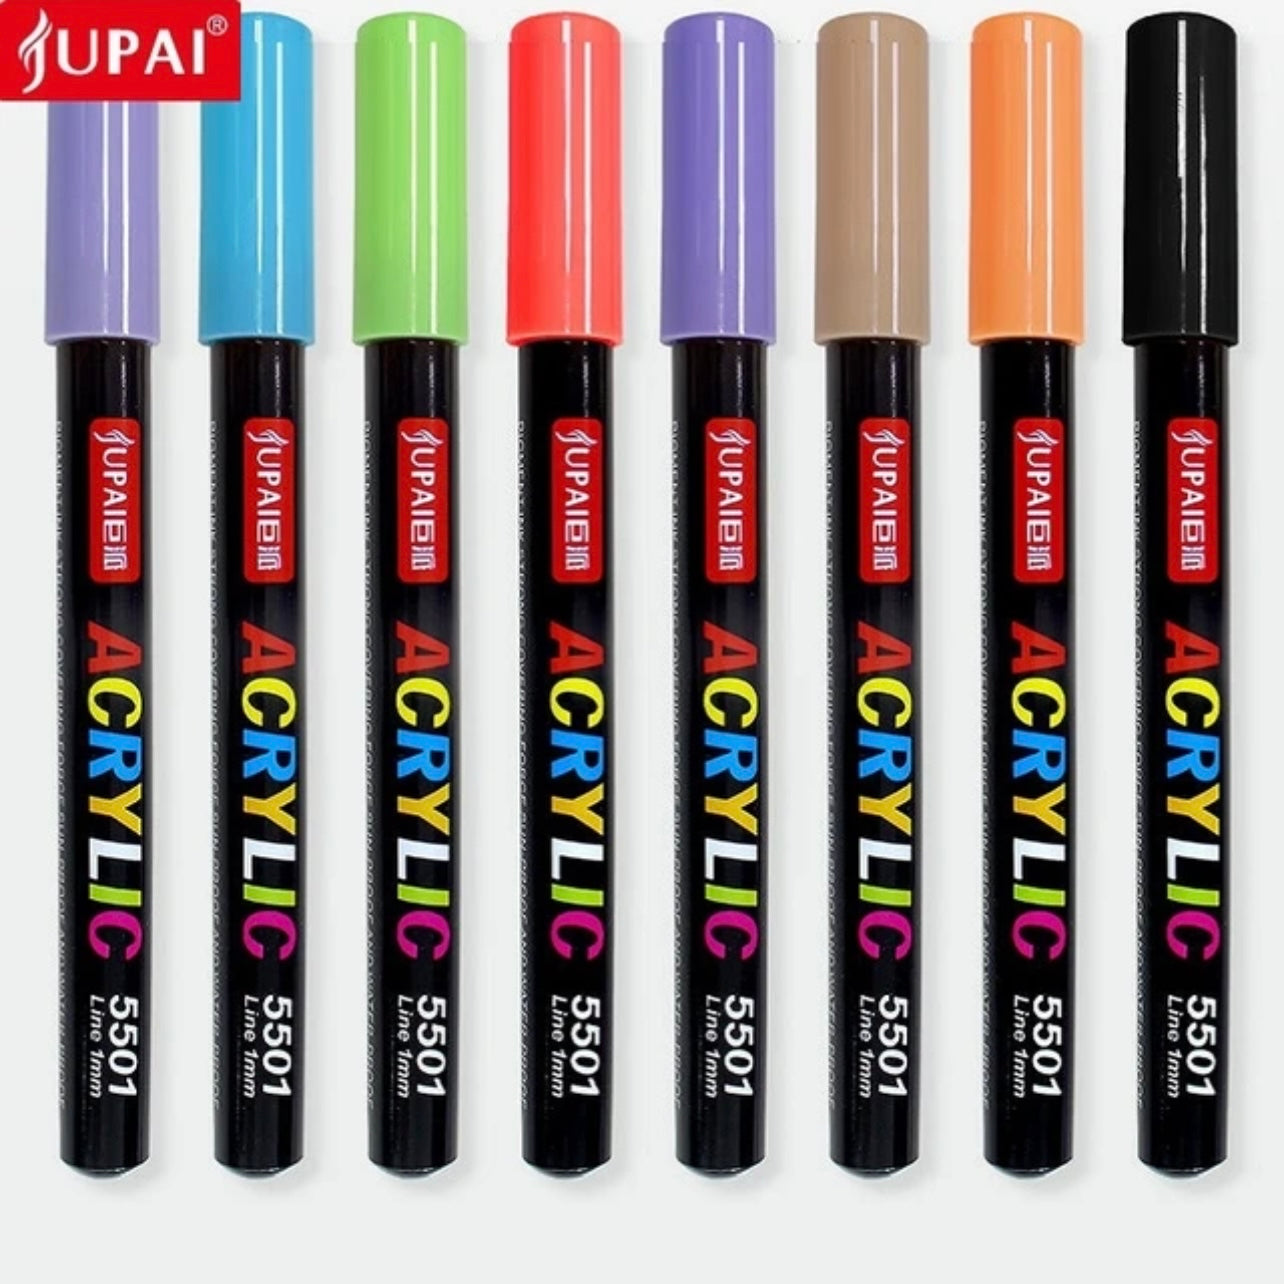 Jubai Acrylic Marker 48 Colors || الوان اكريليك ماركر جوباي ٤٨ لون